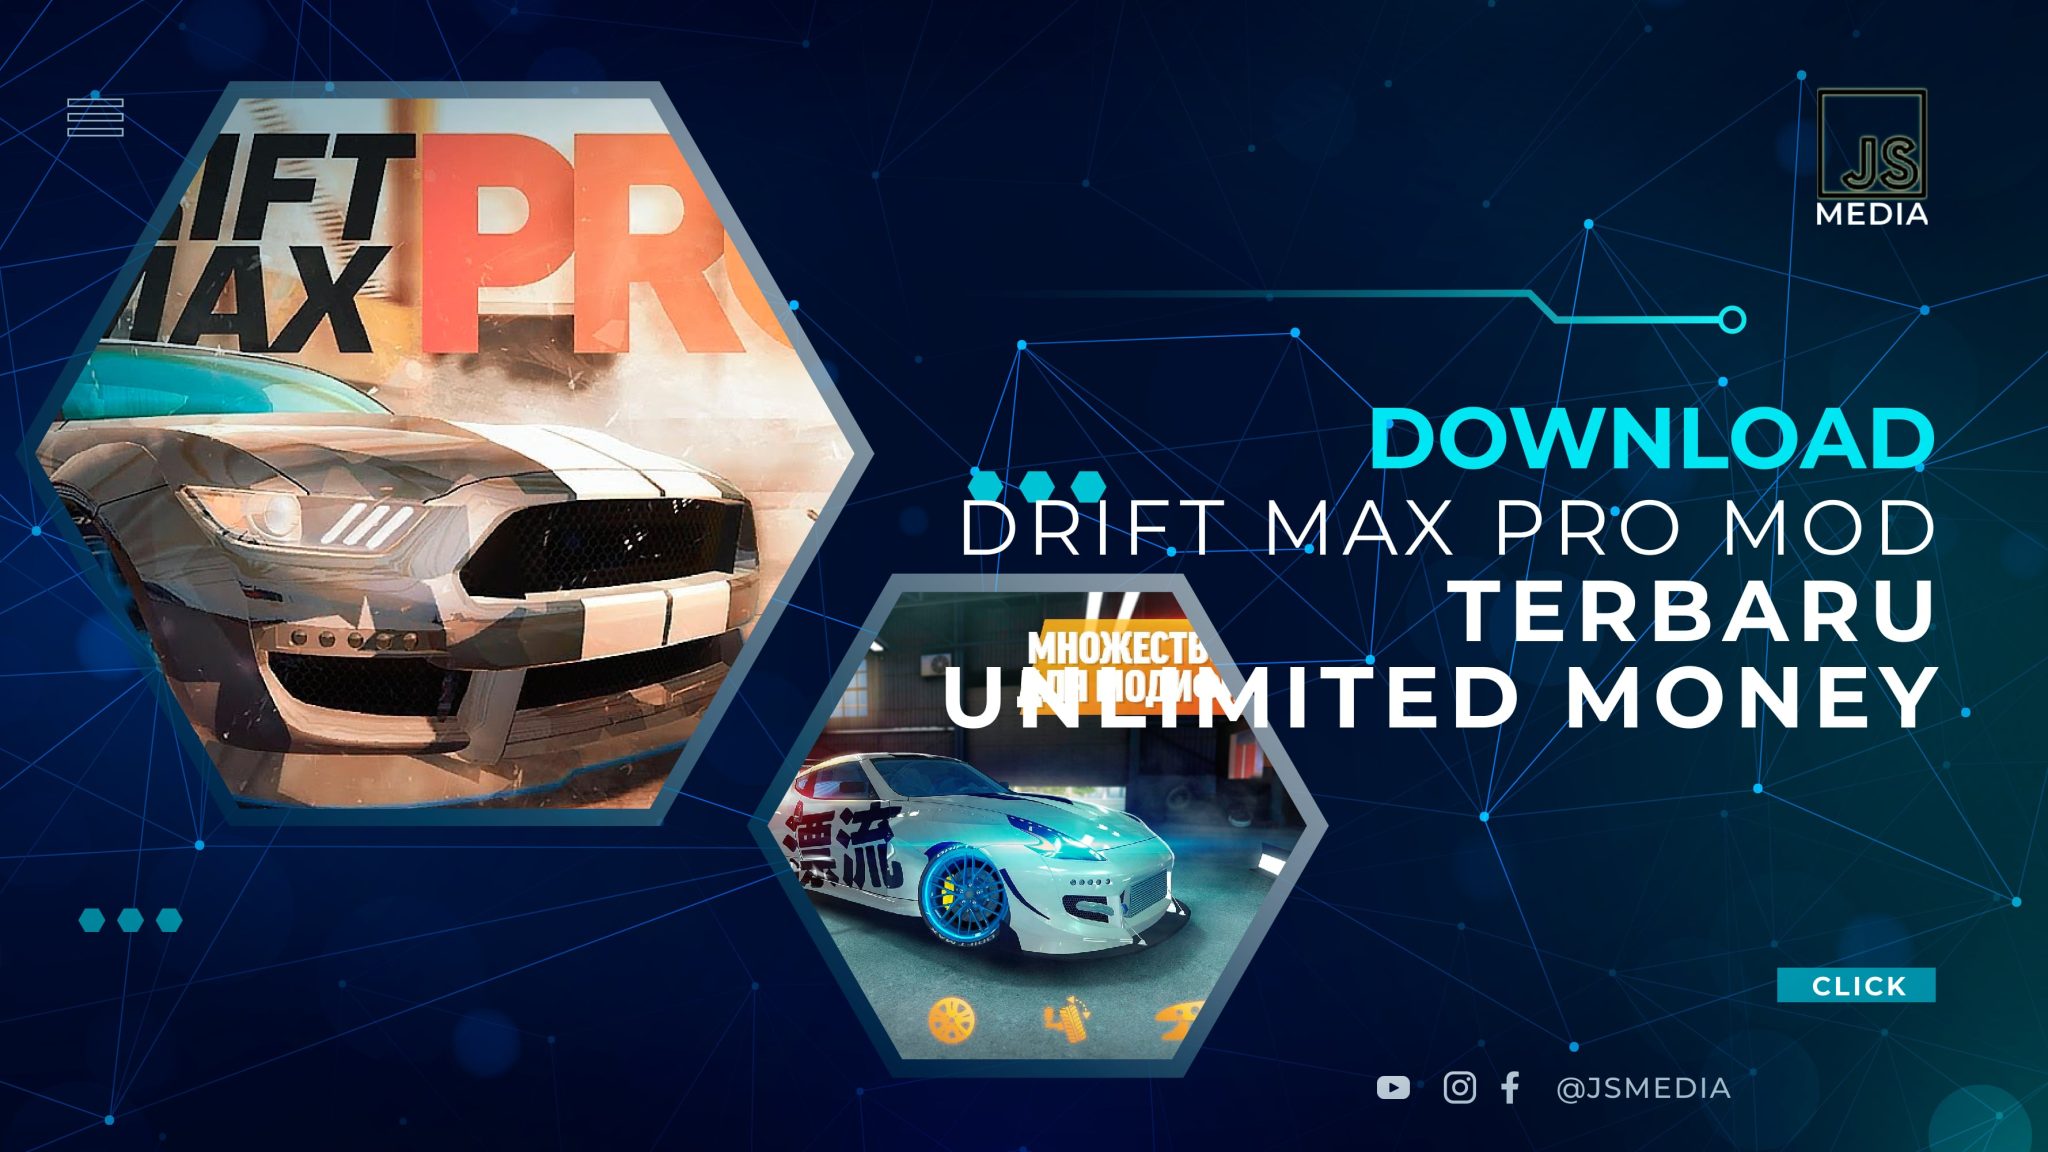 Drift Max Pro Mod. Drift Max Pro. Drift Max Pro мод. Mod APK ofdirific Max Pro m2. Игру drift max pro много денег